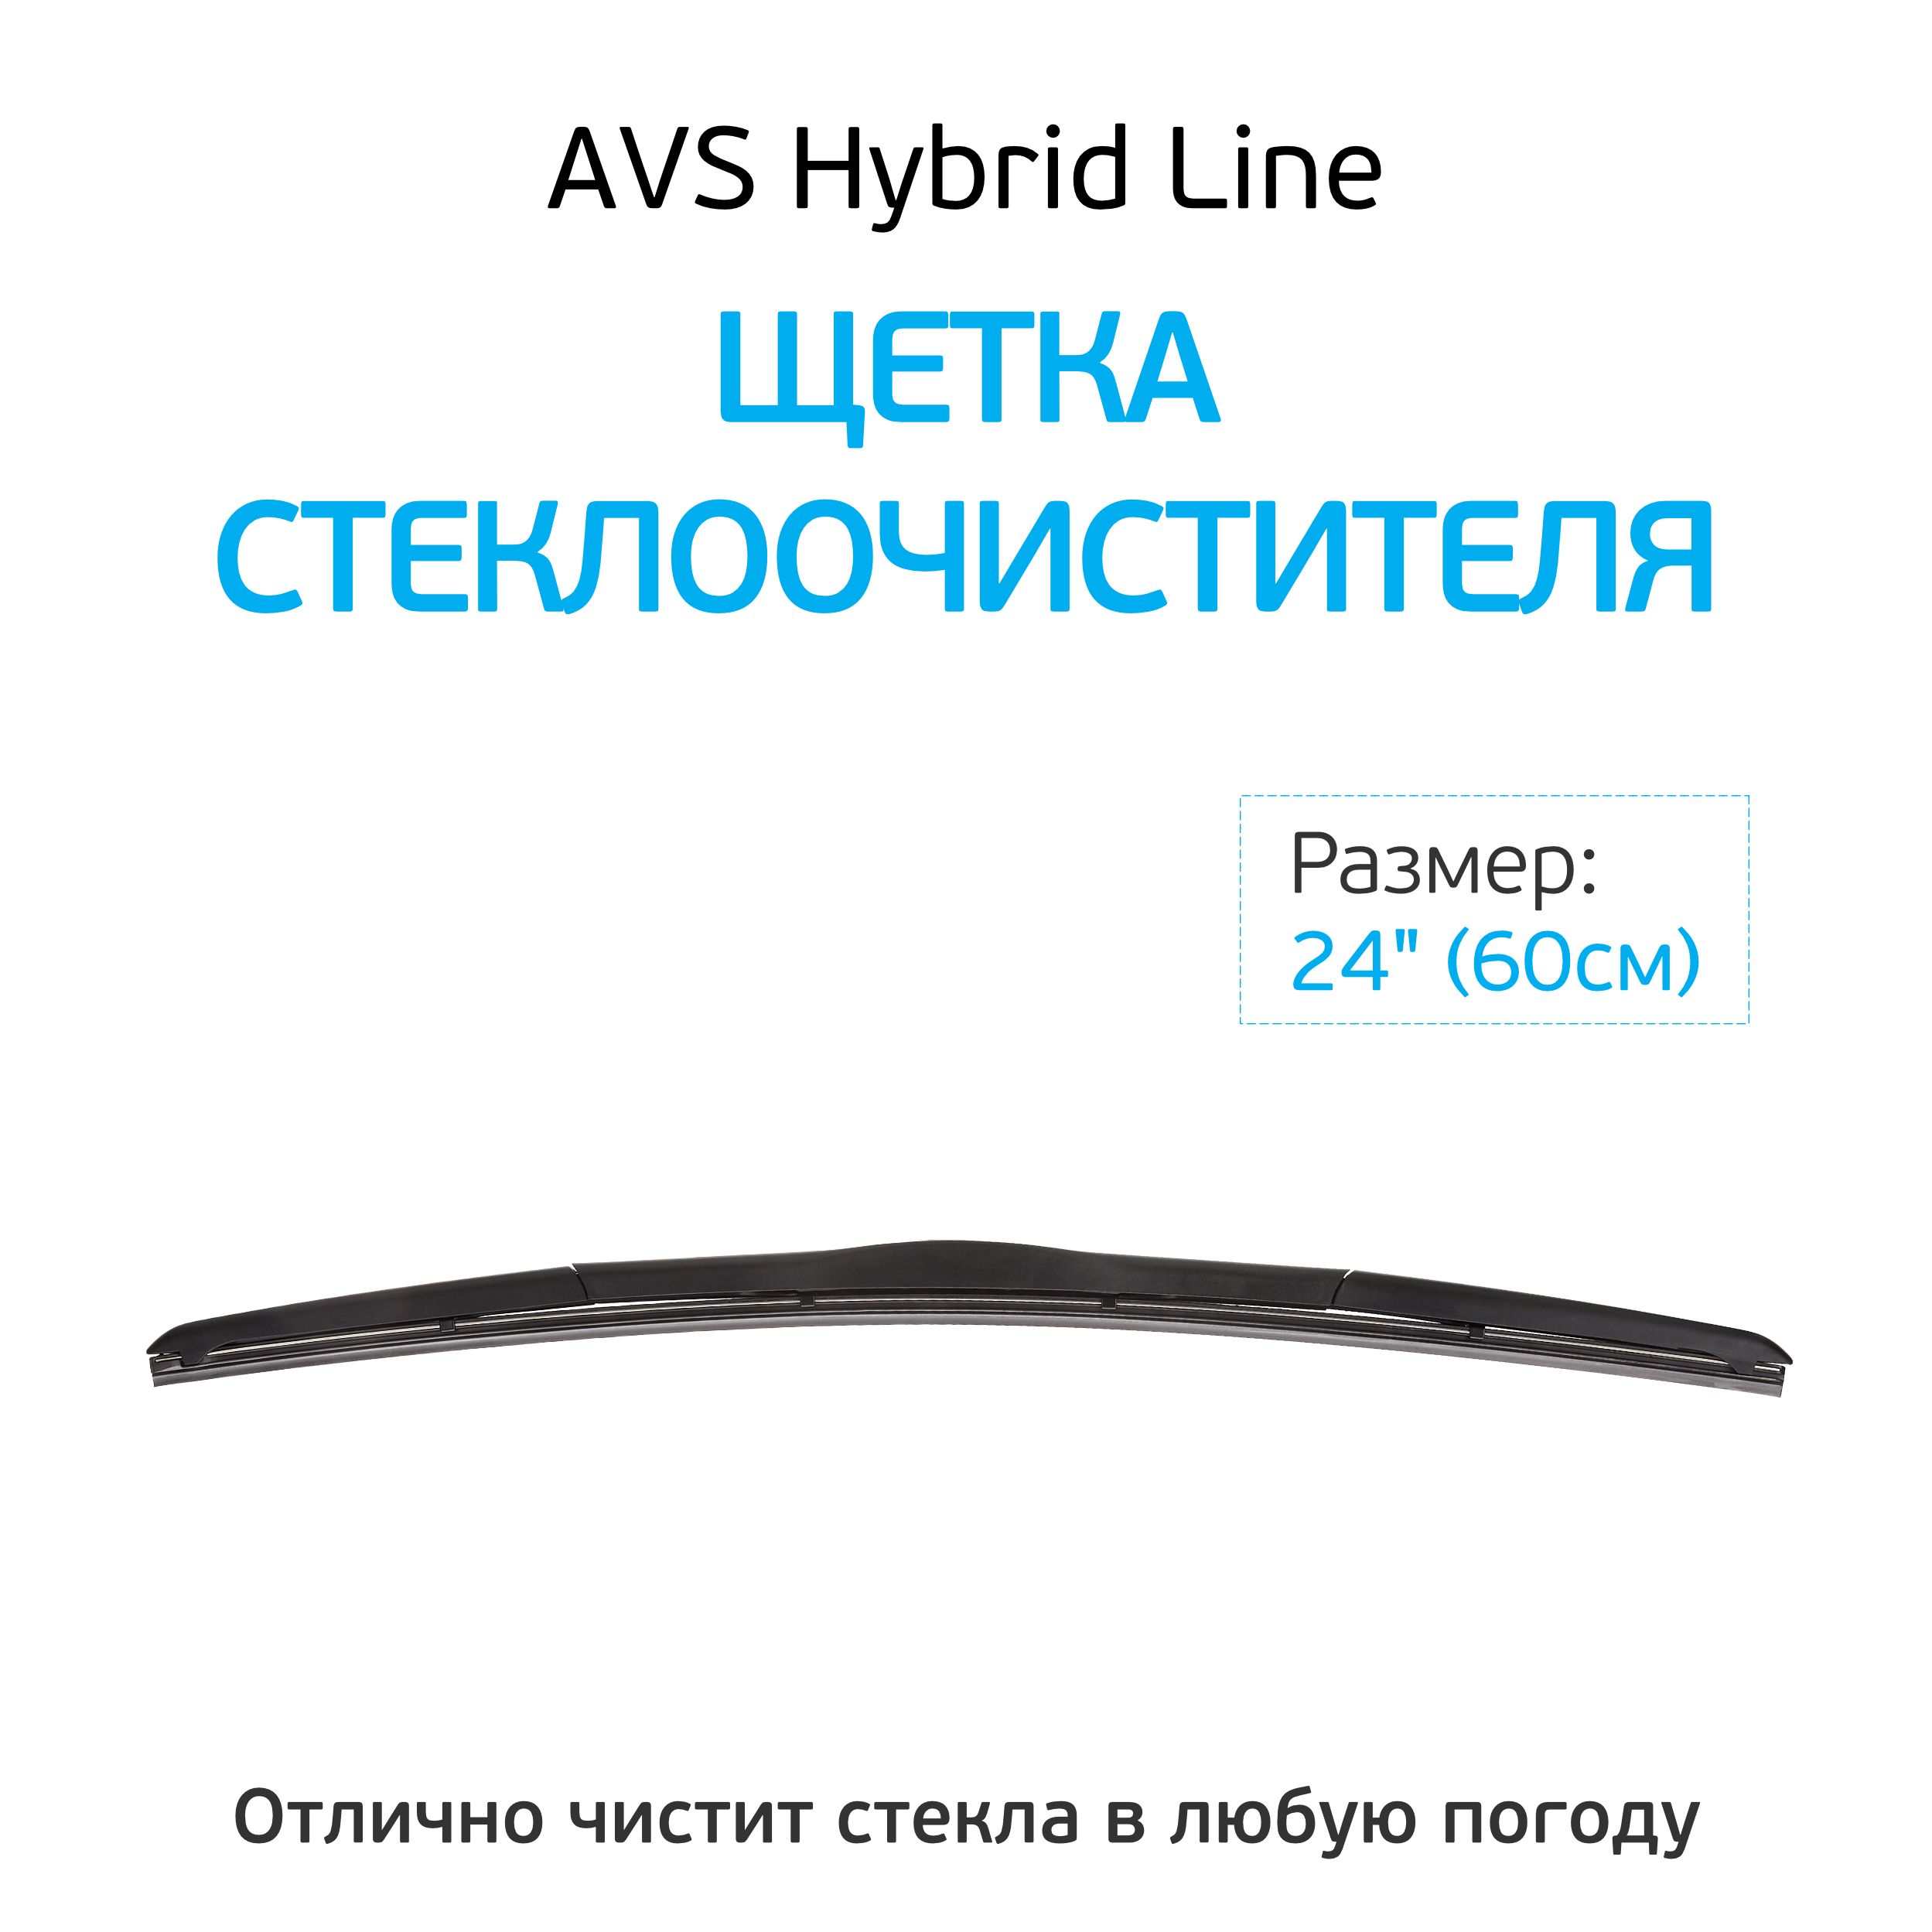 Hybrid line. Щетка стеклоочистителя гибридная AVS Hybrid line hw. Щетка стеклоочистителя AVS Hybrid line hw-24 (60 см). Щетка стеклоочистителя 50см AVS Hybrid line hw-20. Щётка стеклоочистителя гибридная 600мм.